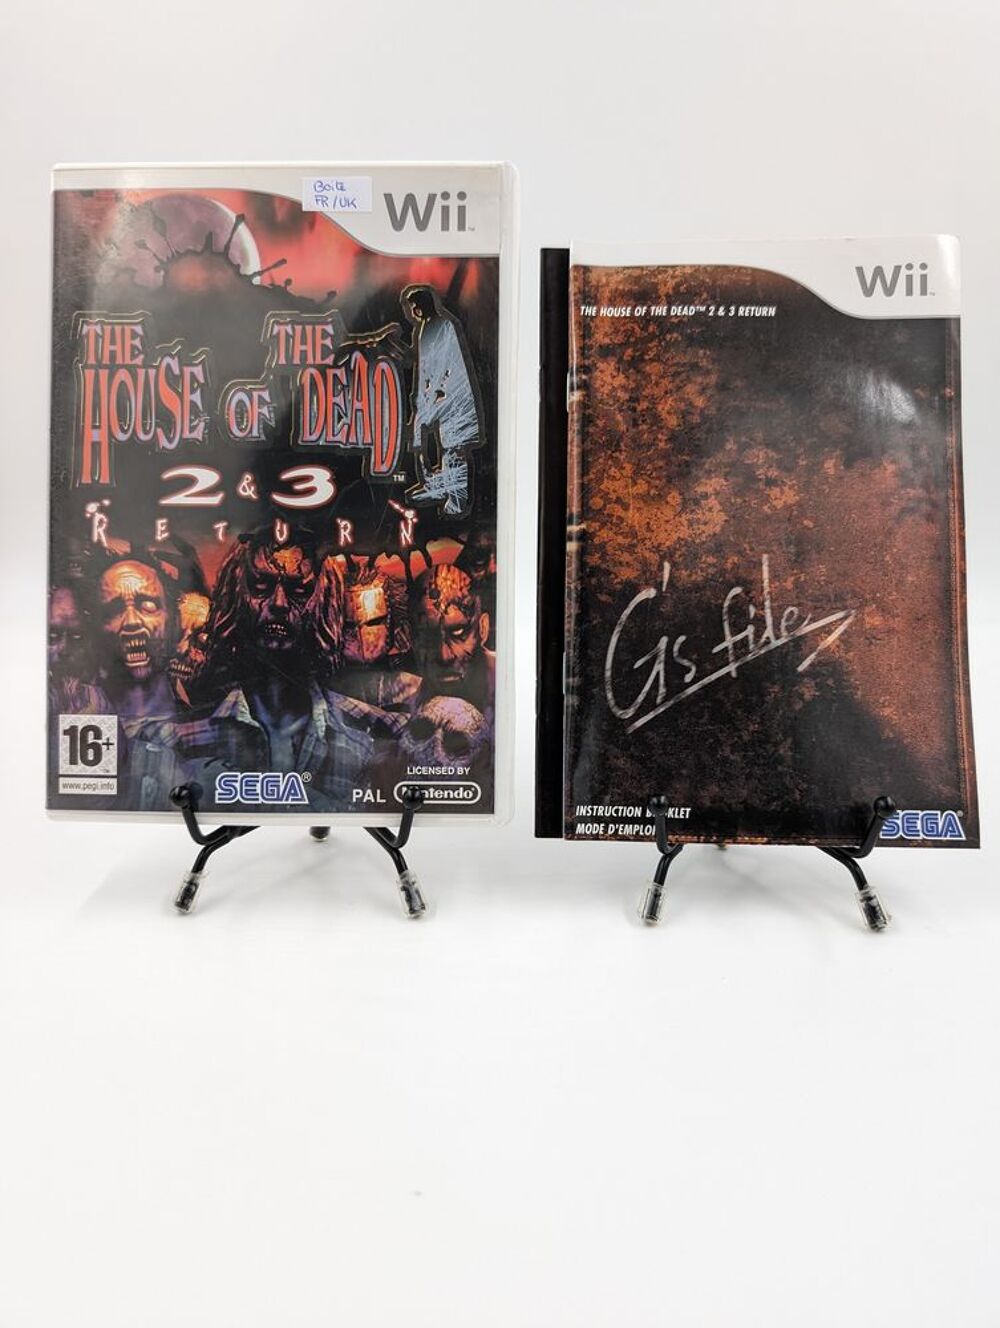 Jeu Nintendo Wii The House of the Dead 2 &amp; 3 Return complet Consoles et jeux vidos